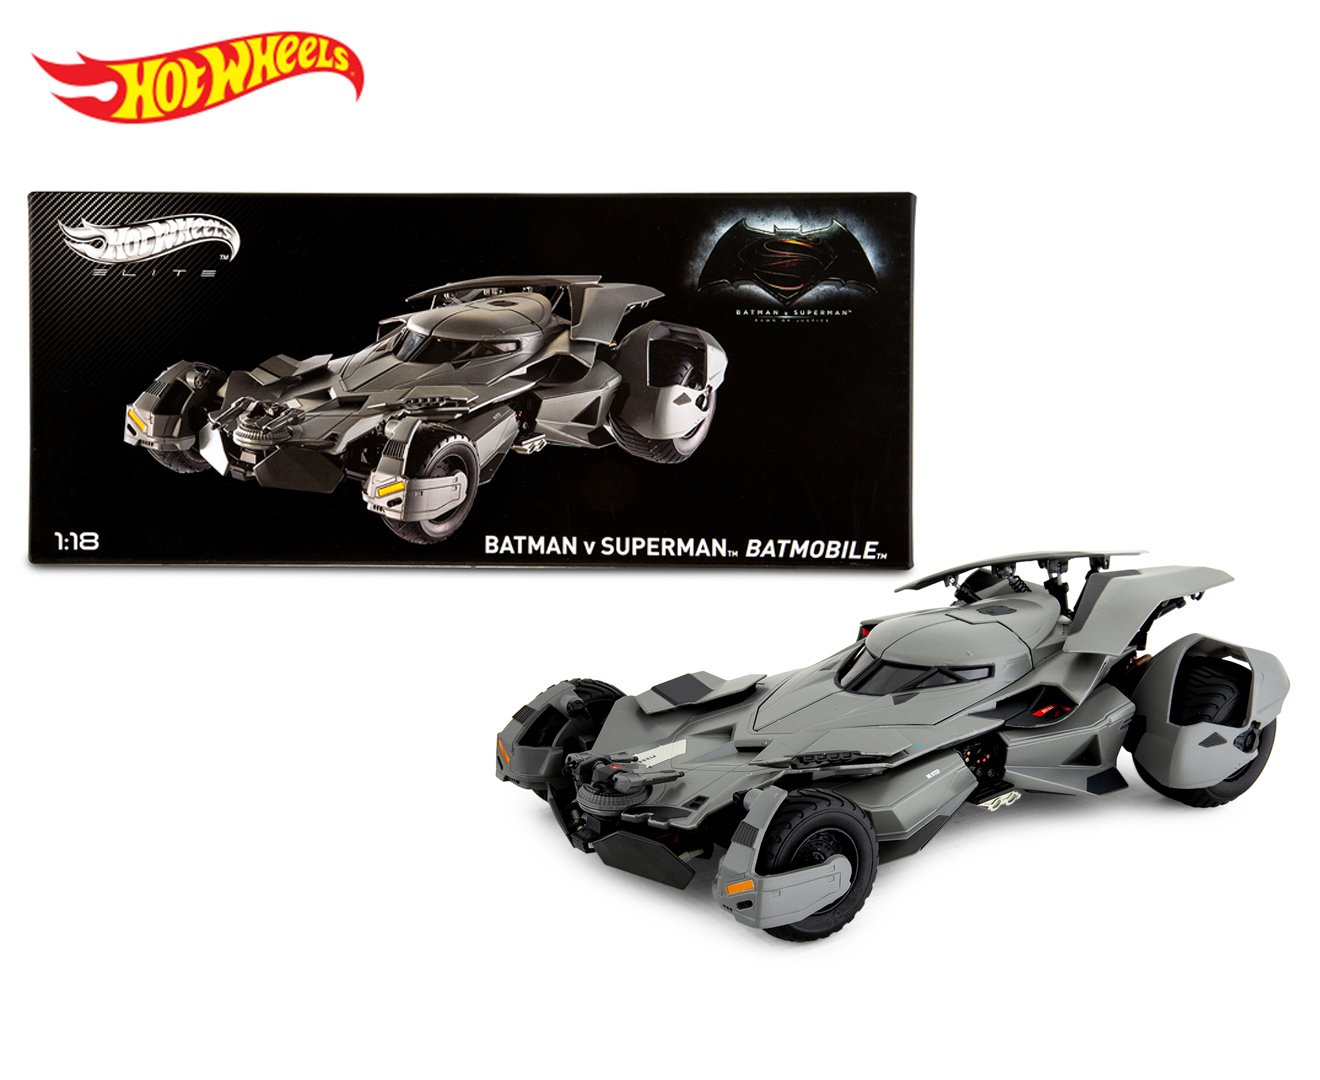 Hot Wheels Elite 1:18 Batman v Superman Batmobile Model 